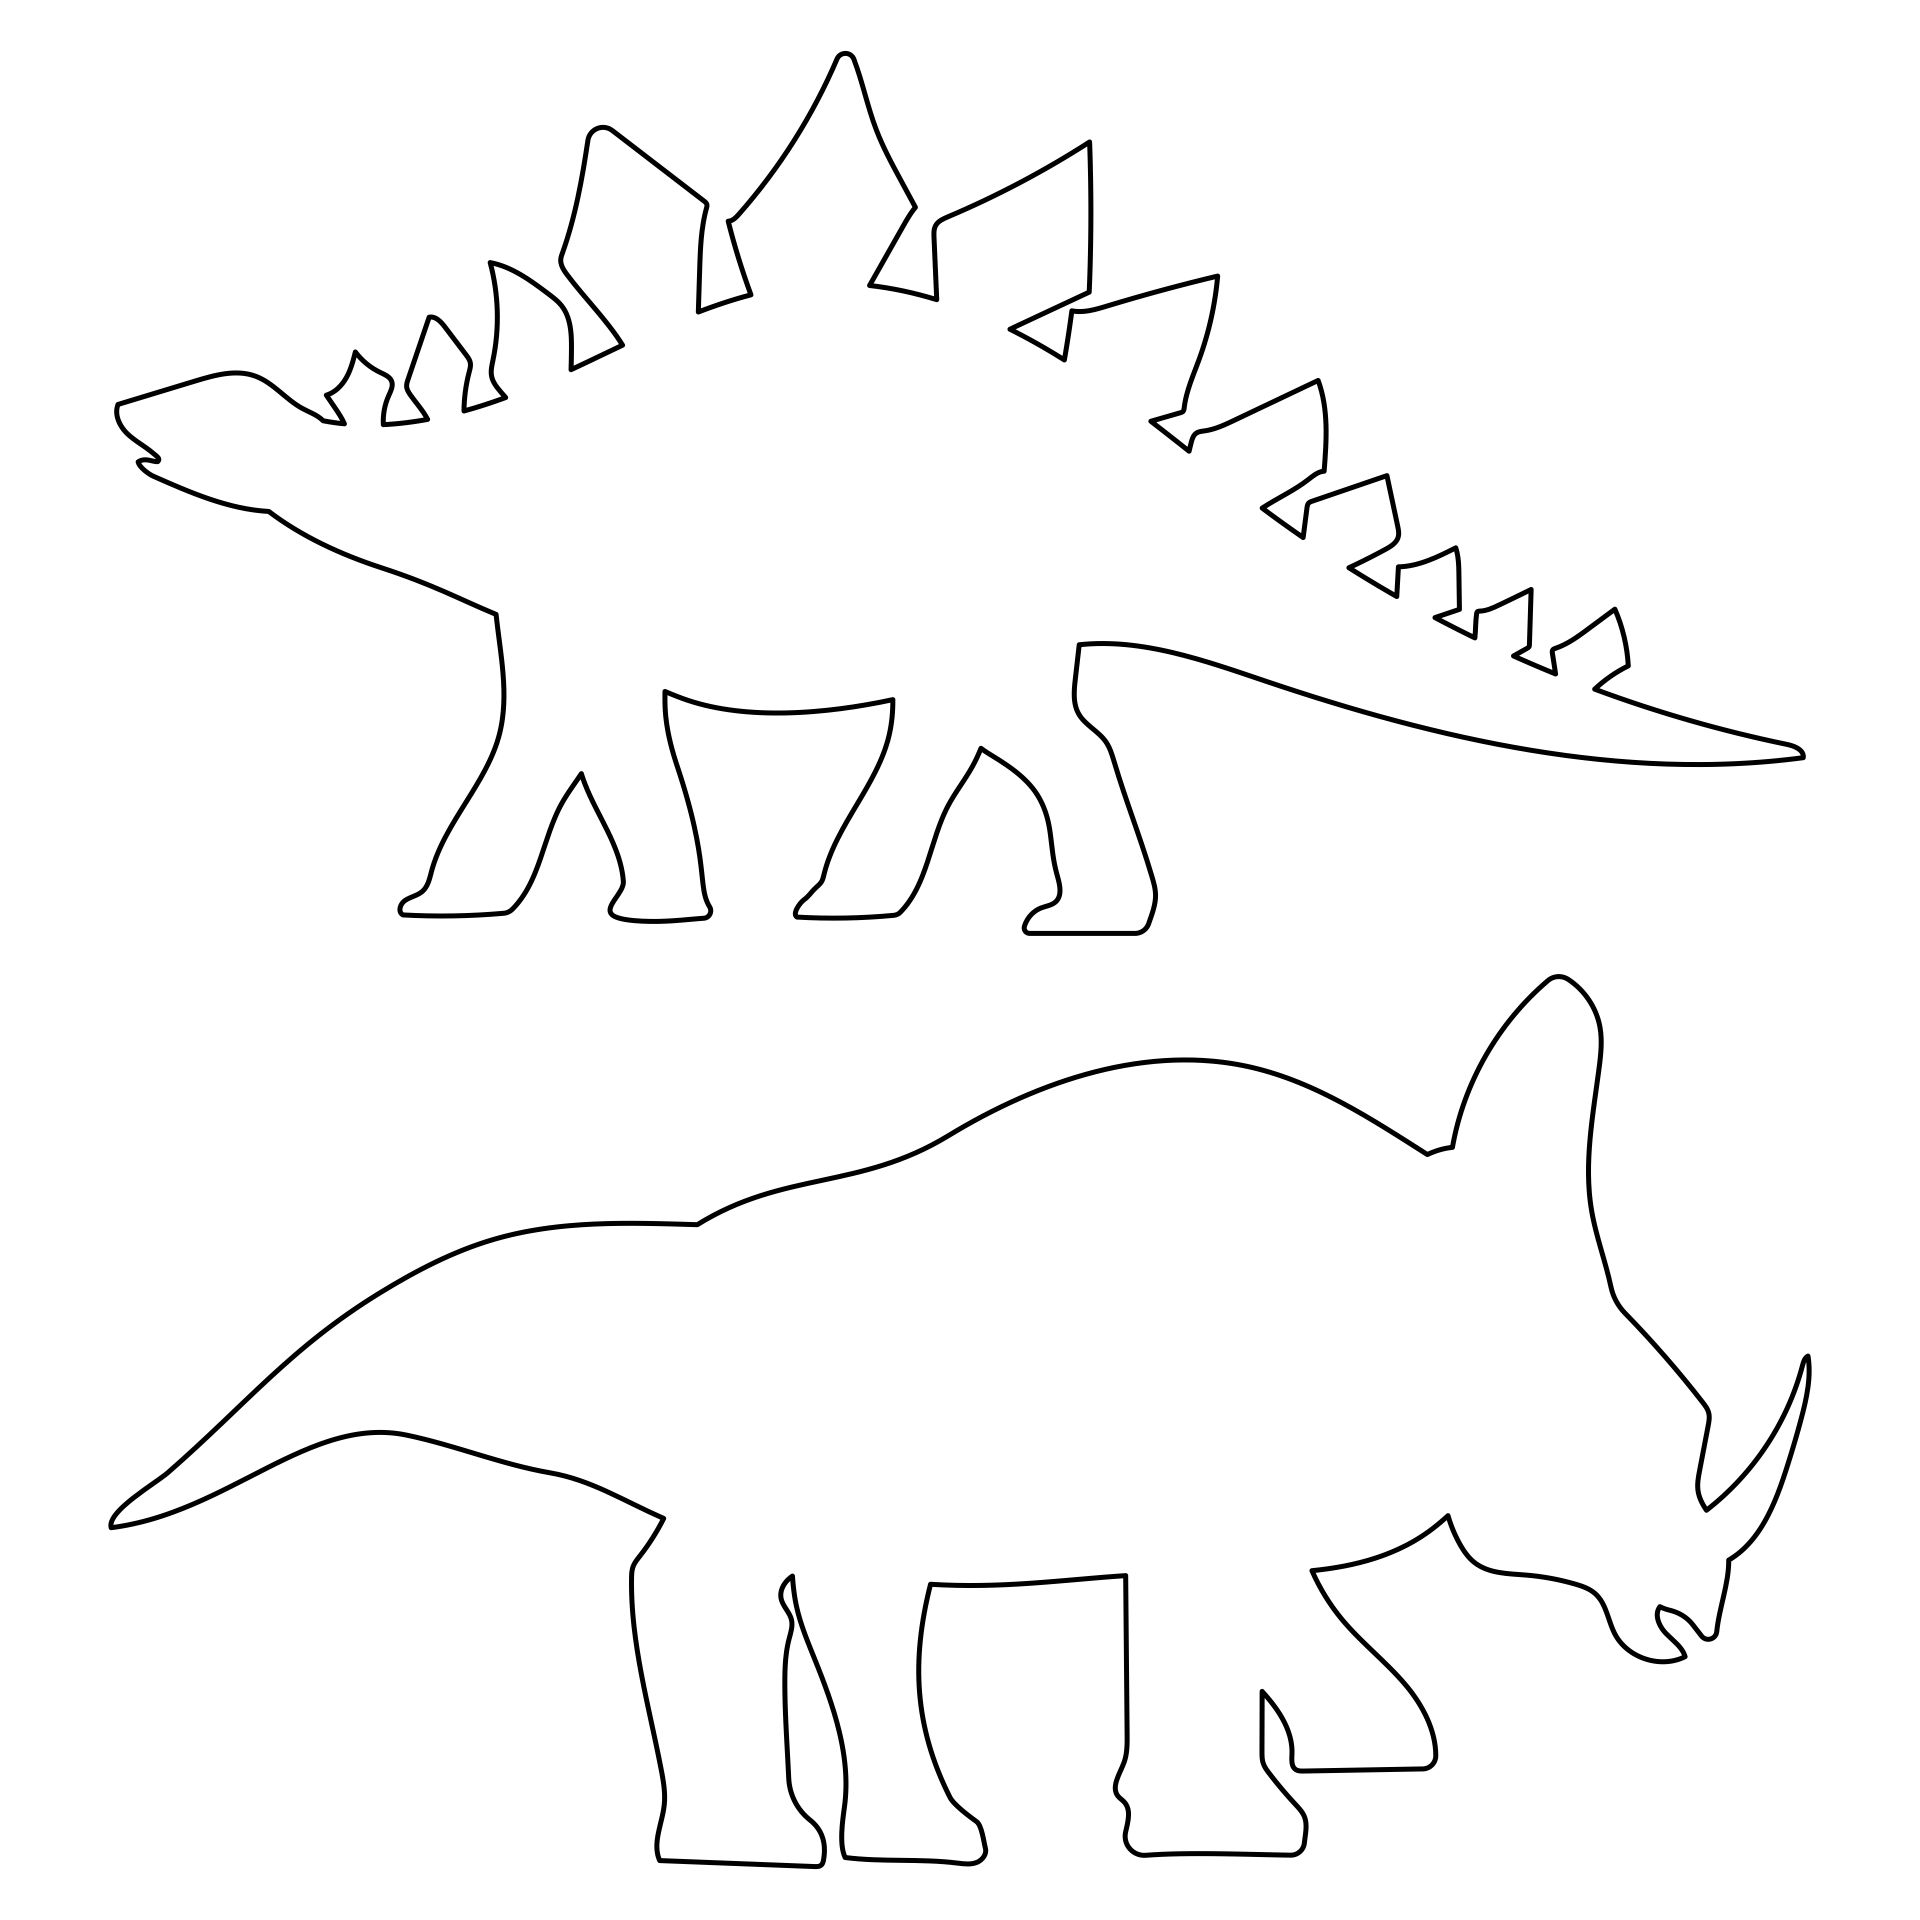  Printable Dinosaur Pattern